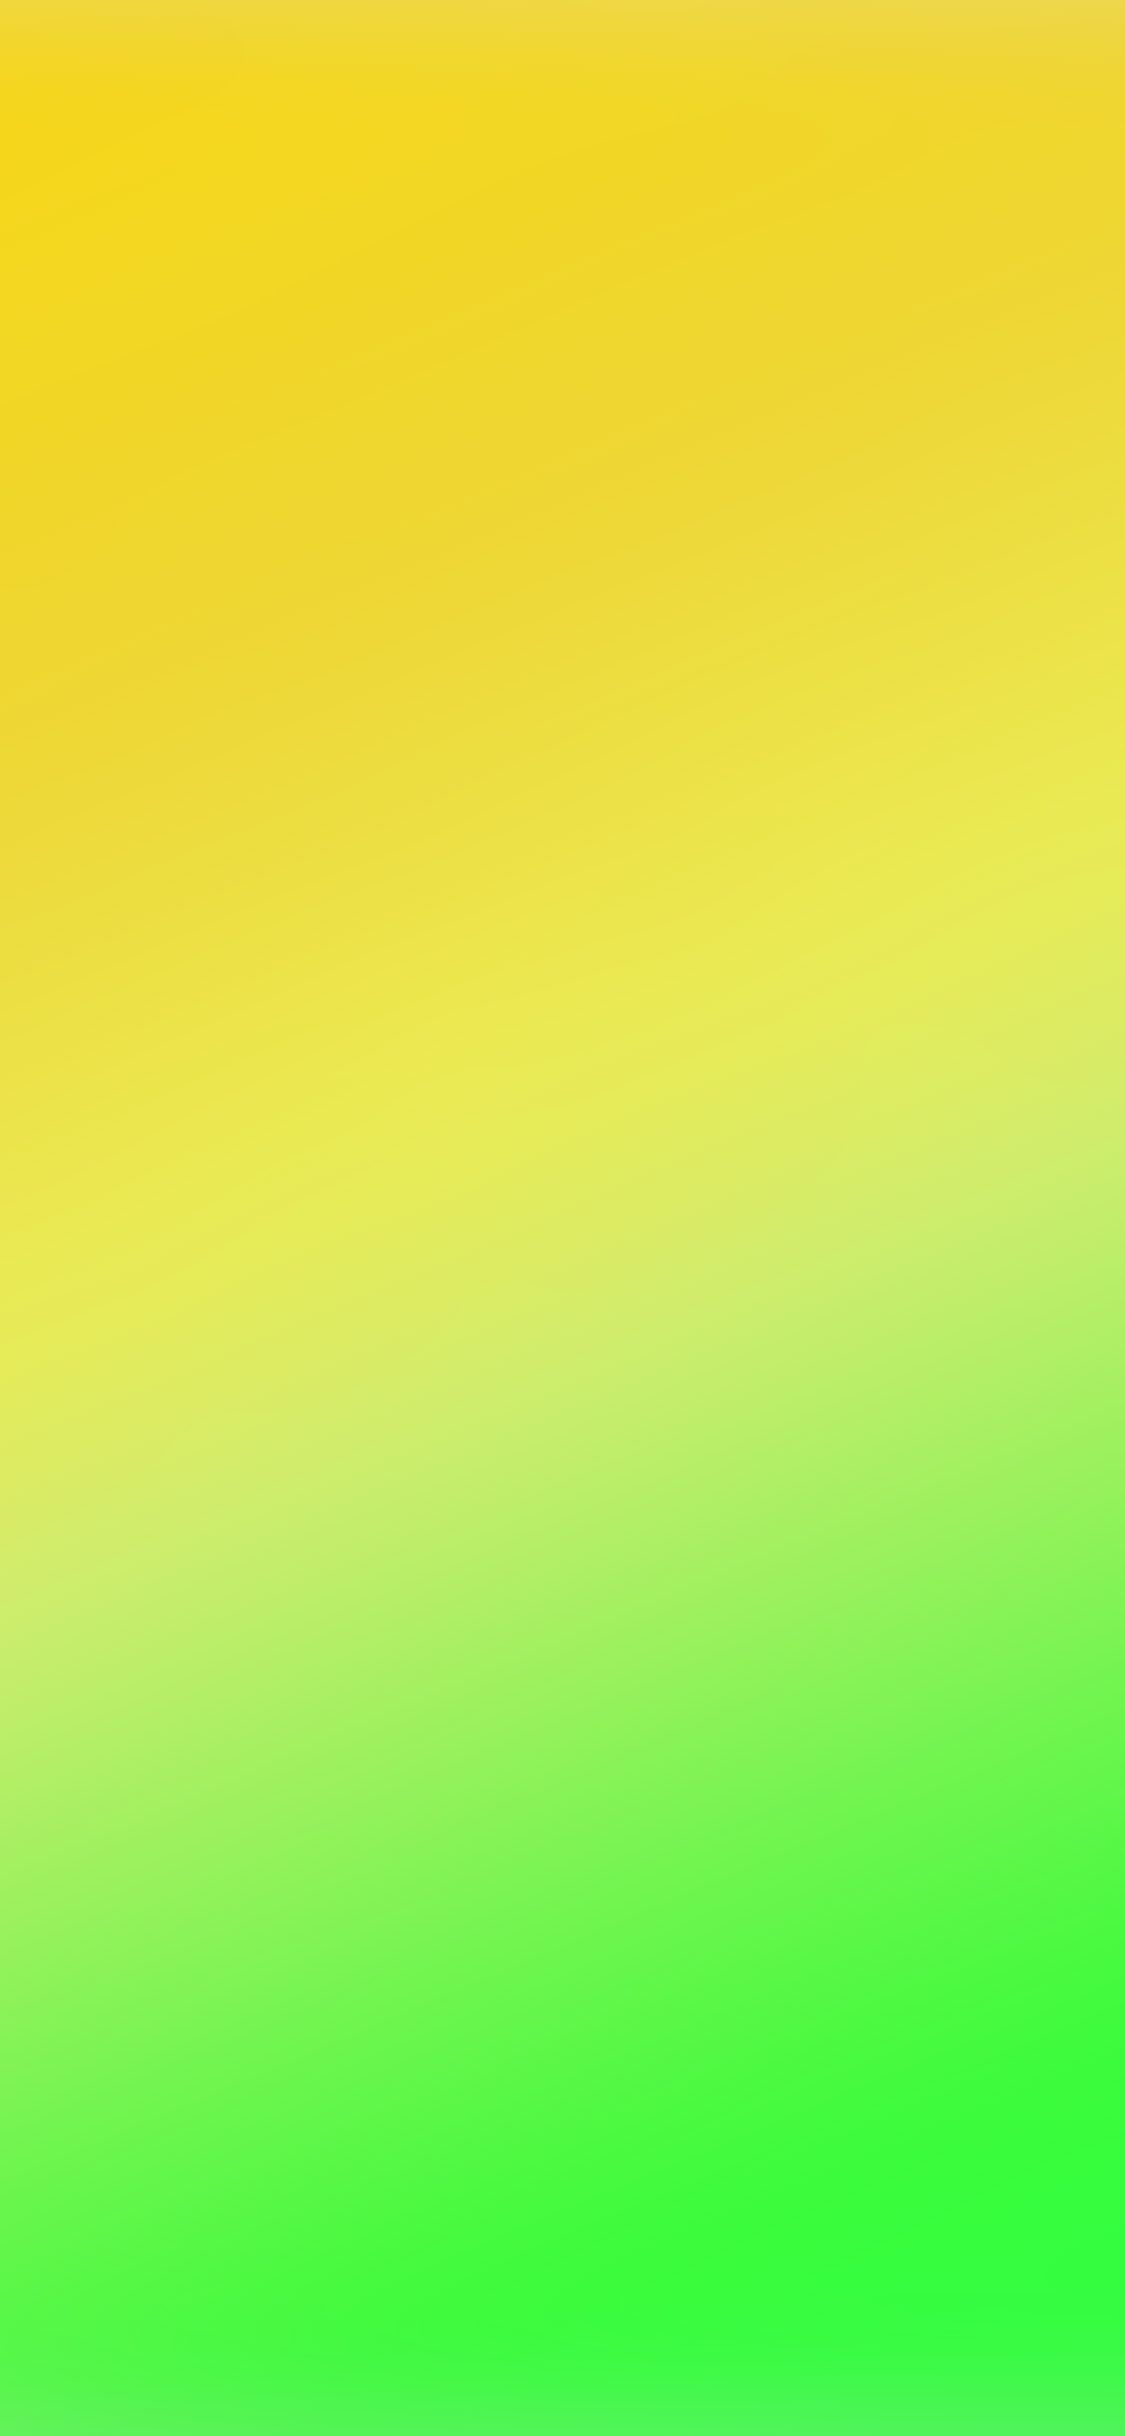 Yellow Green Blur Gradation iPhone X Wallpaper Free Download